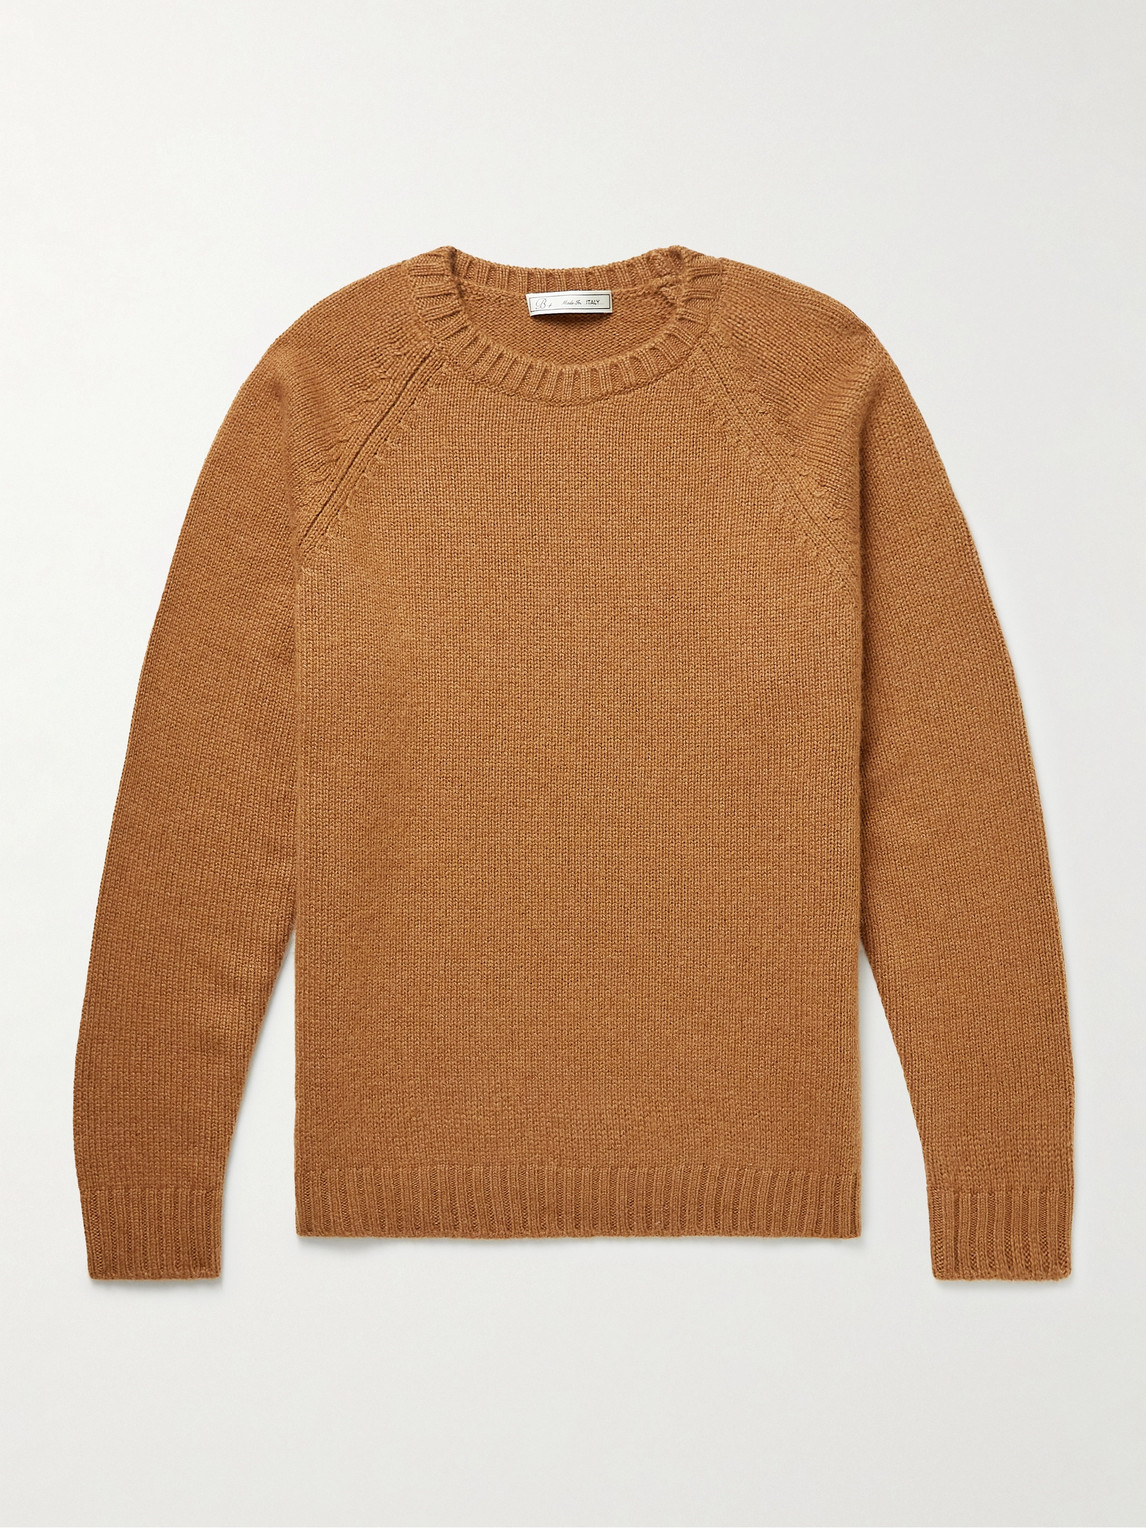 Umit Benan B+ Cashmere Sweater In Brown